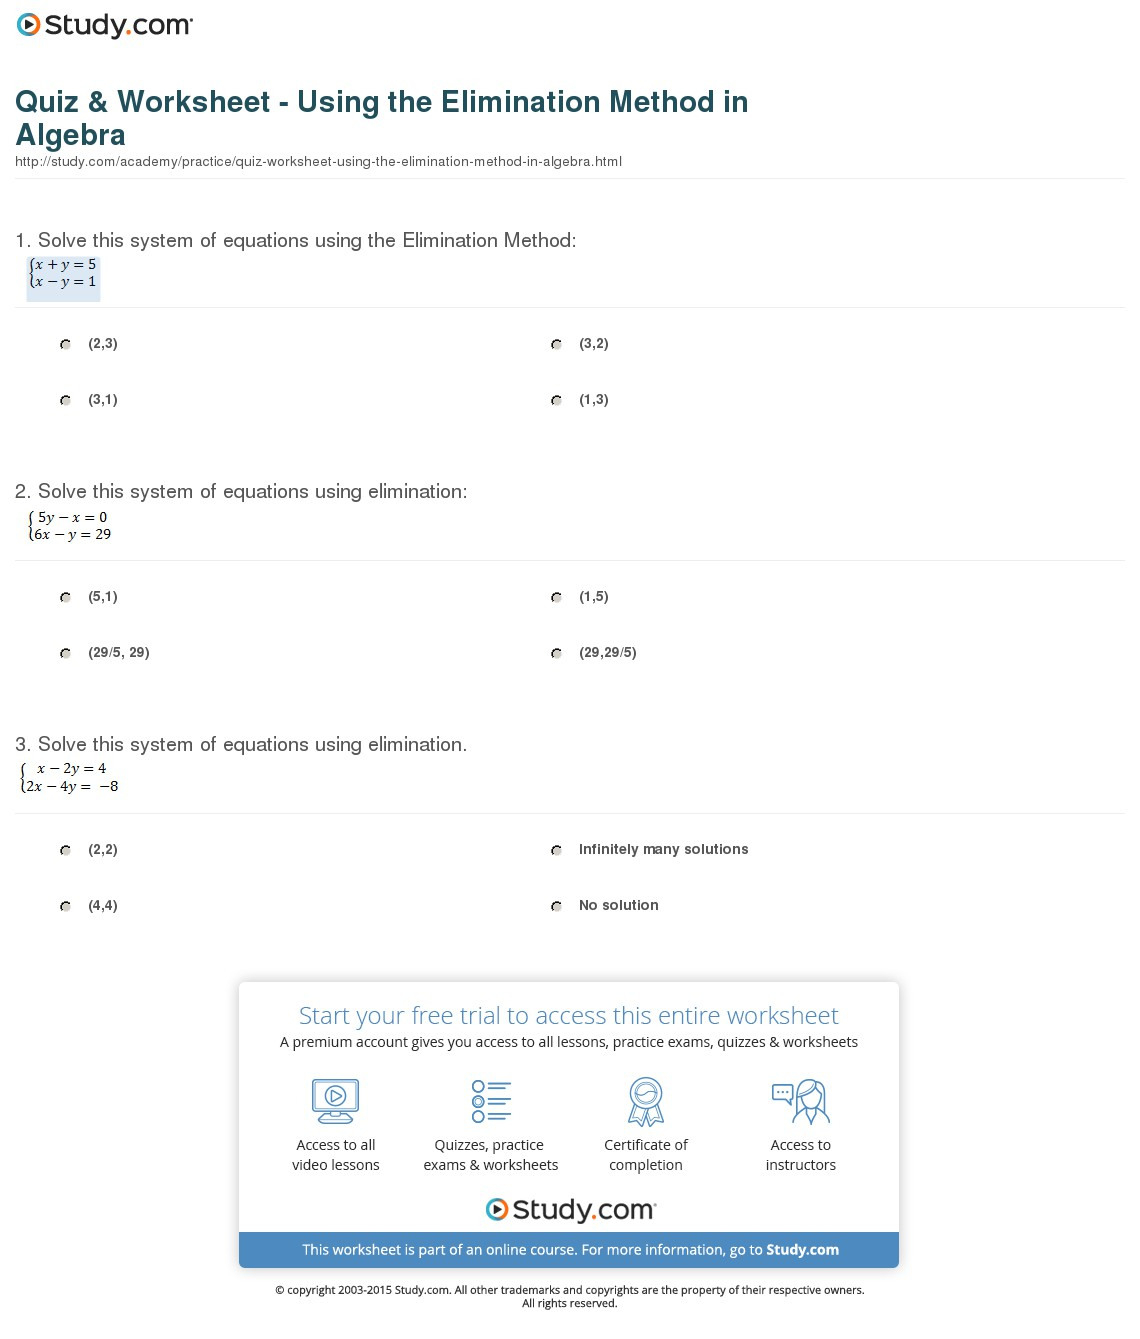 quiz-worksheet-using-the-elimination-method-in-algebra-db-excel